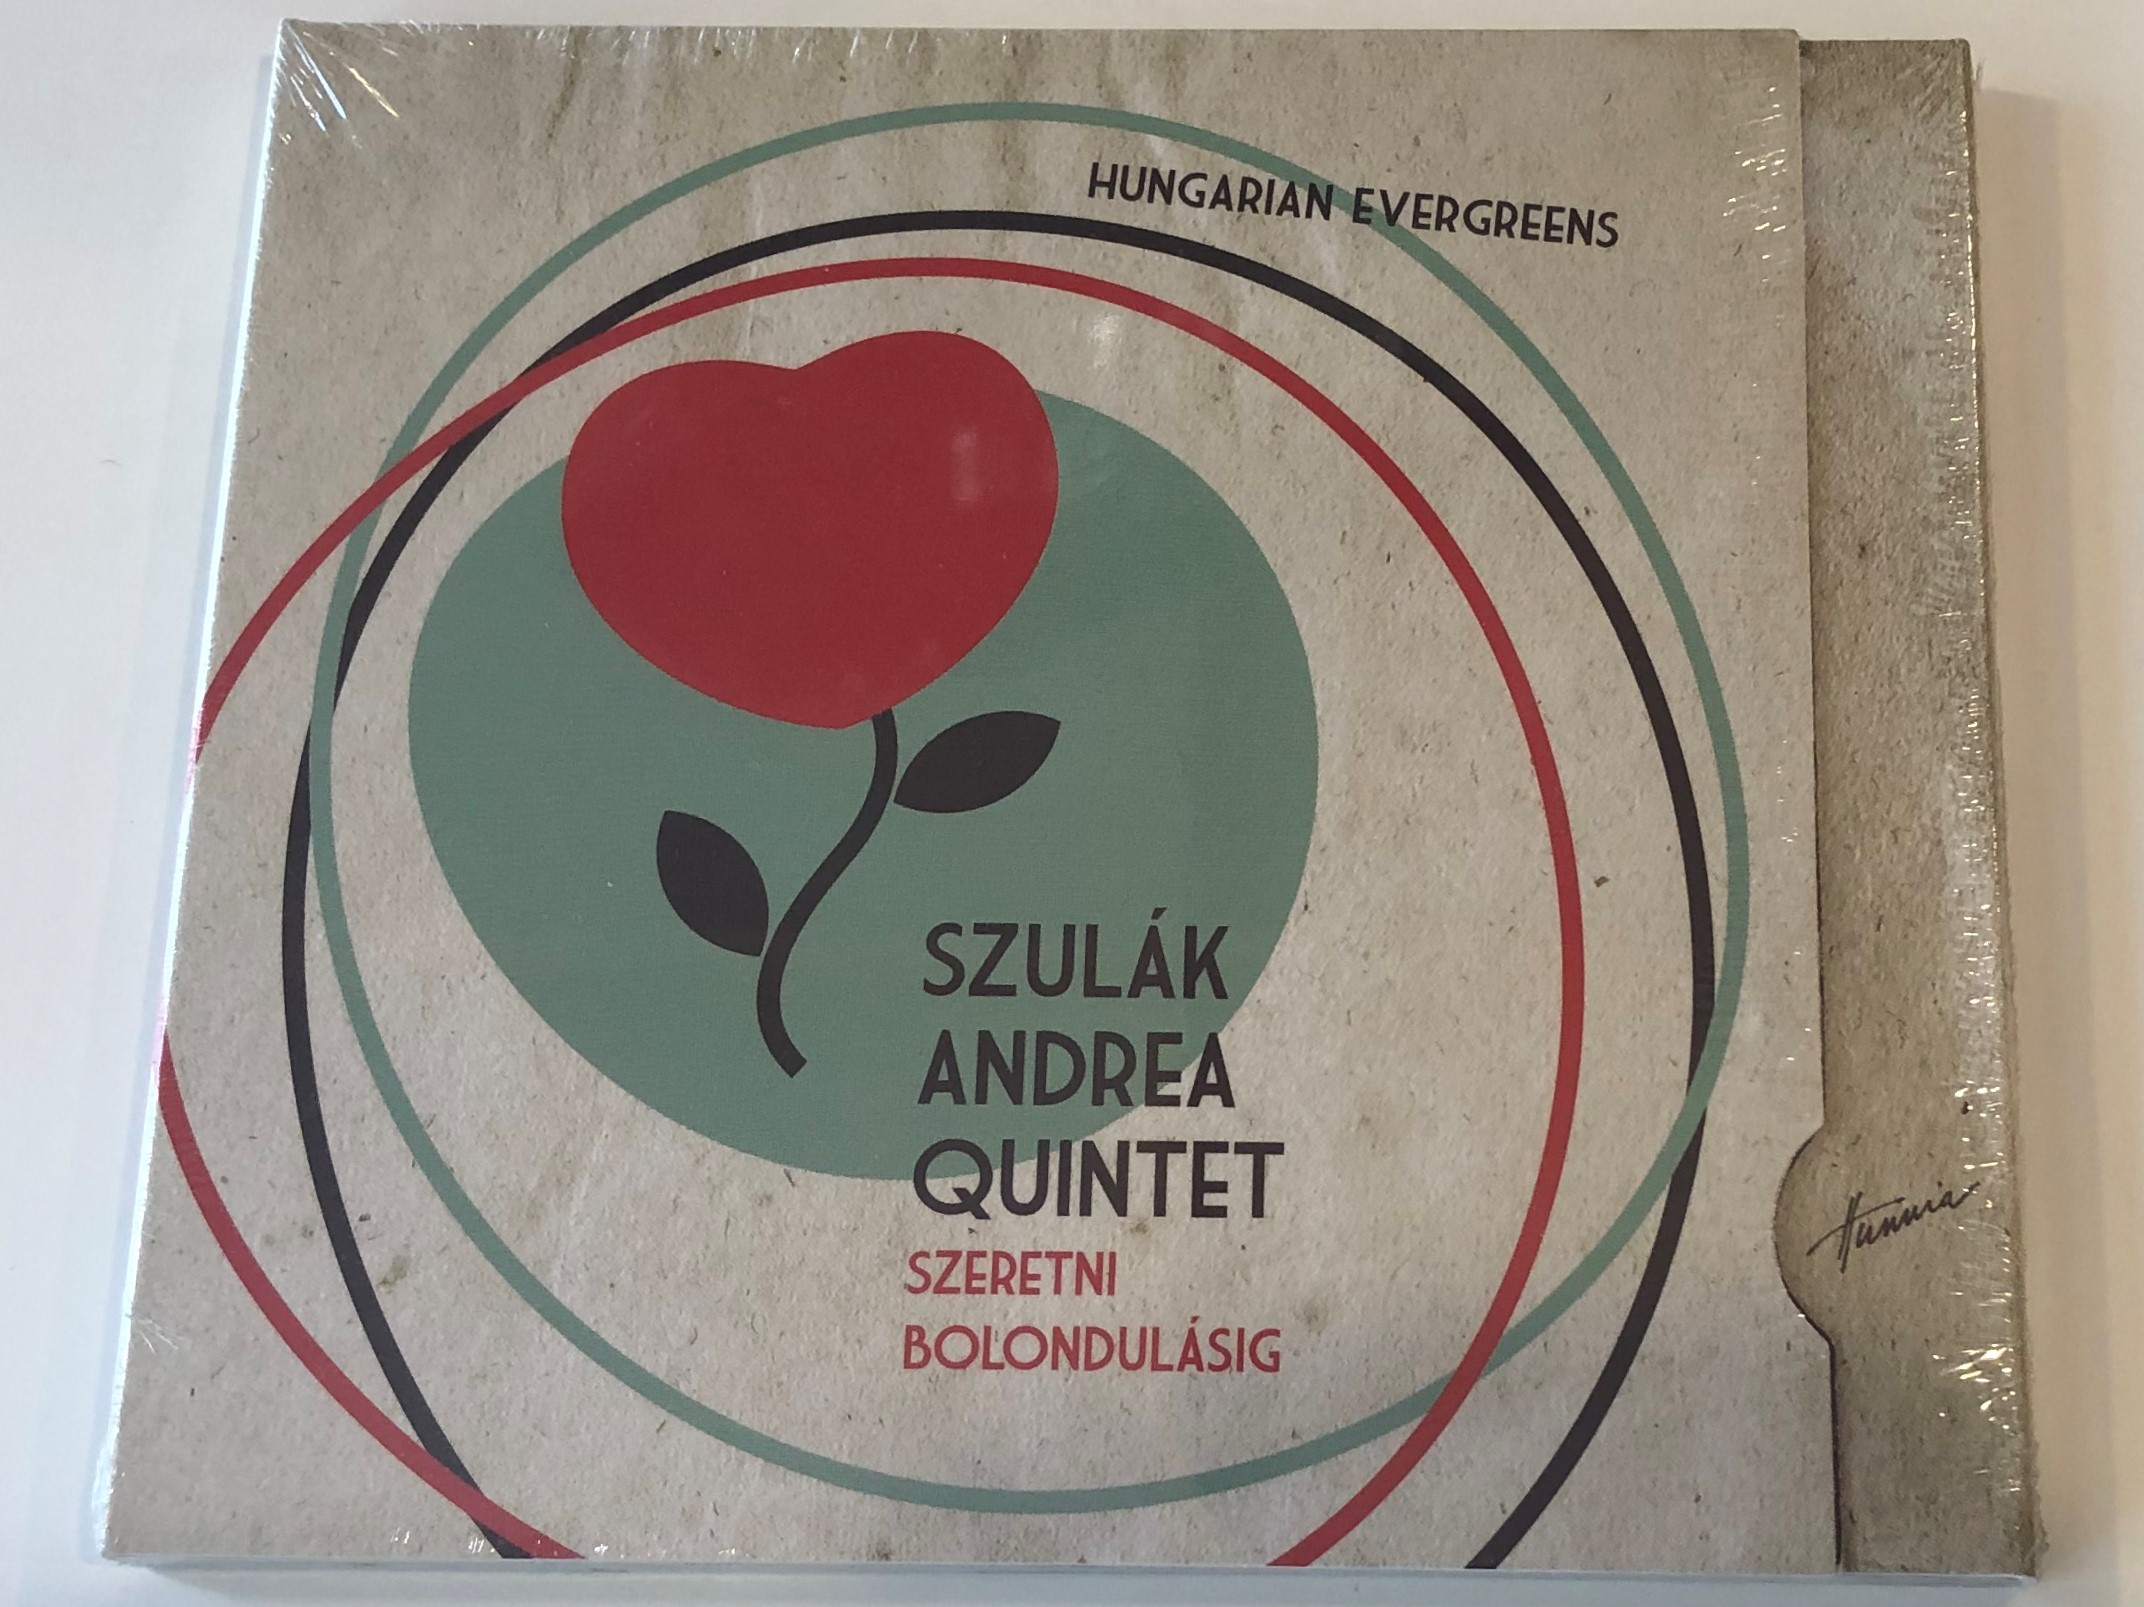 hungarian-evergreens-szul-k-andrea-quintet-szeretni-bolondul-sig-hunnia-records-audio-cd-2012-5999883042717-1-.jpg